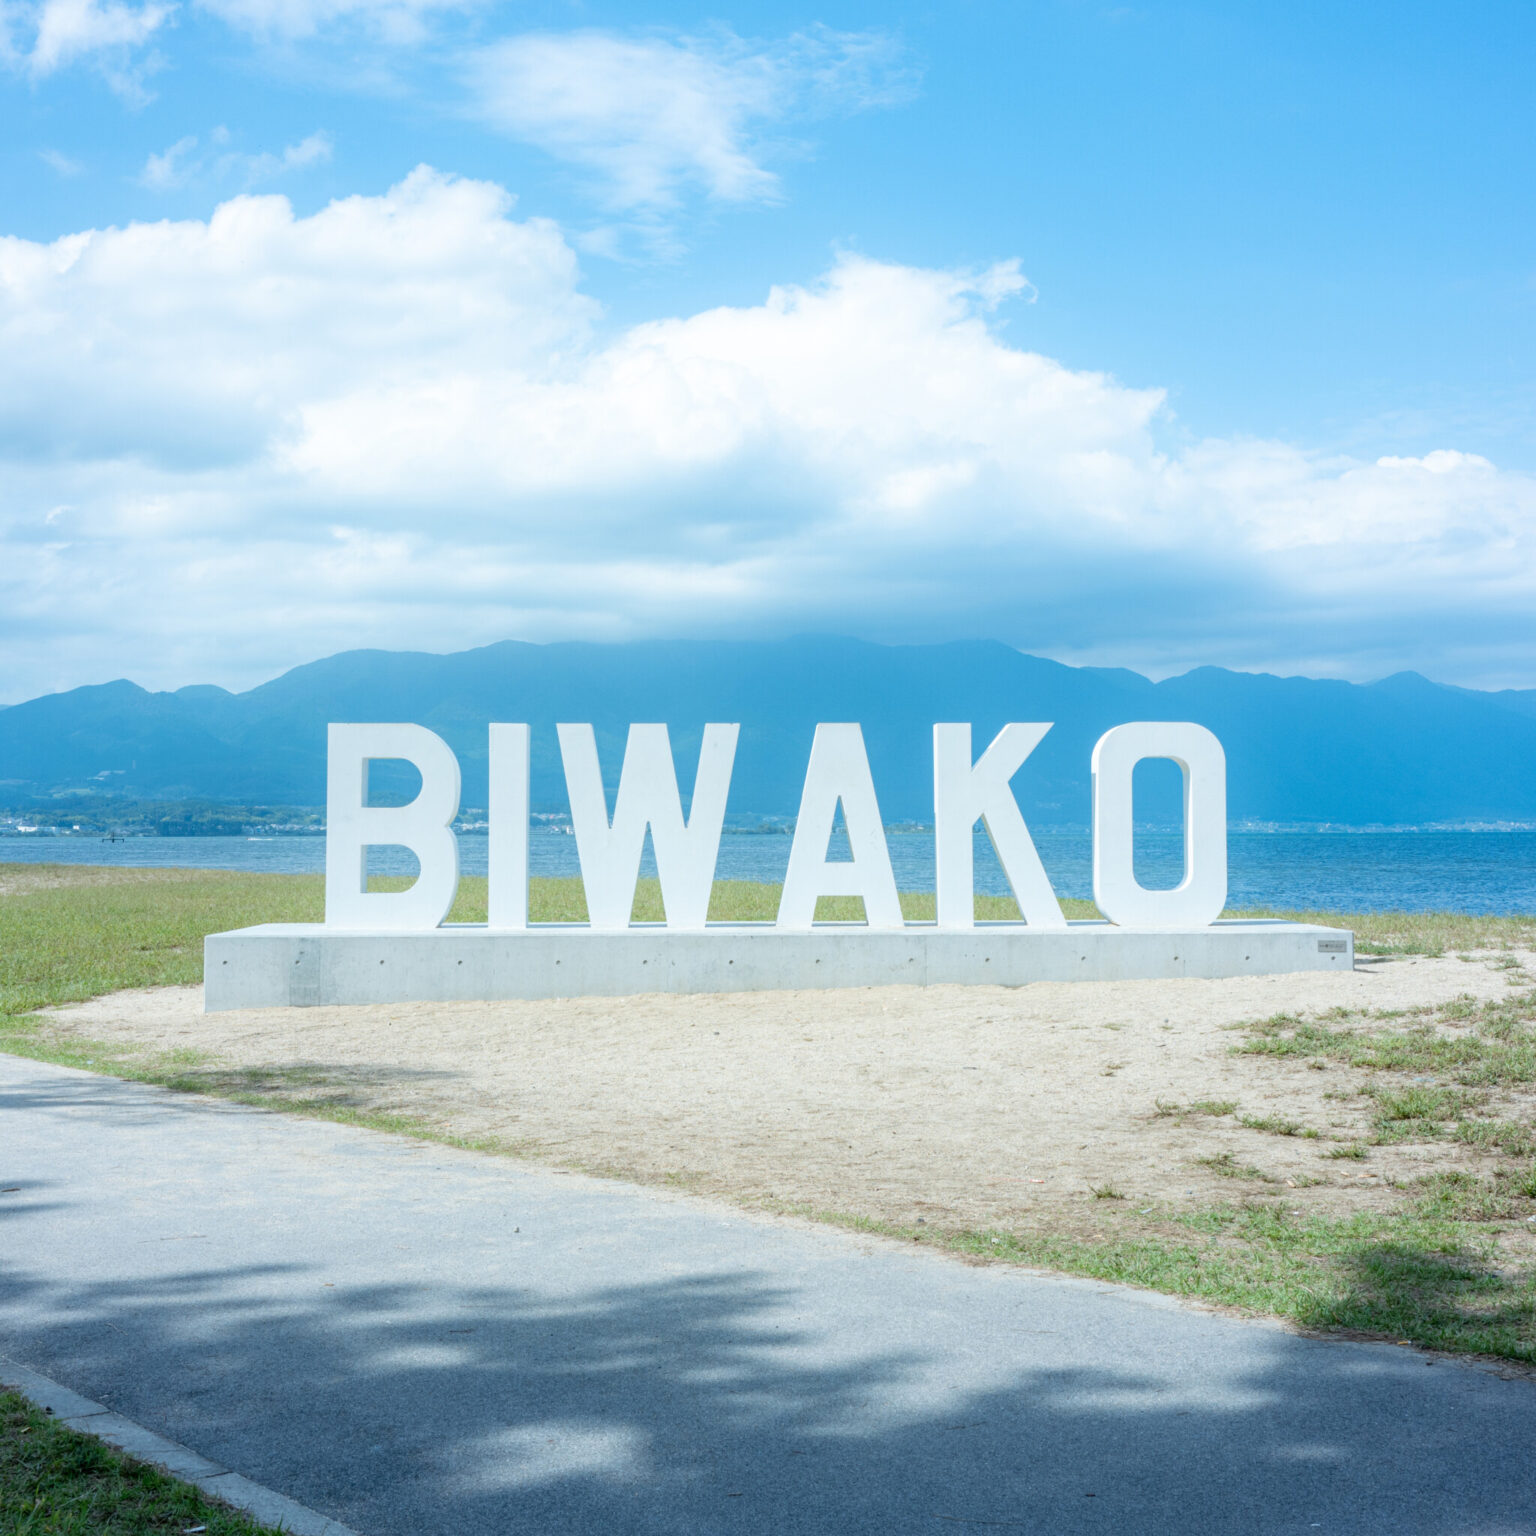 #BIWAKOモニュメント #今年誕生したスポット #サイクリストの聖地